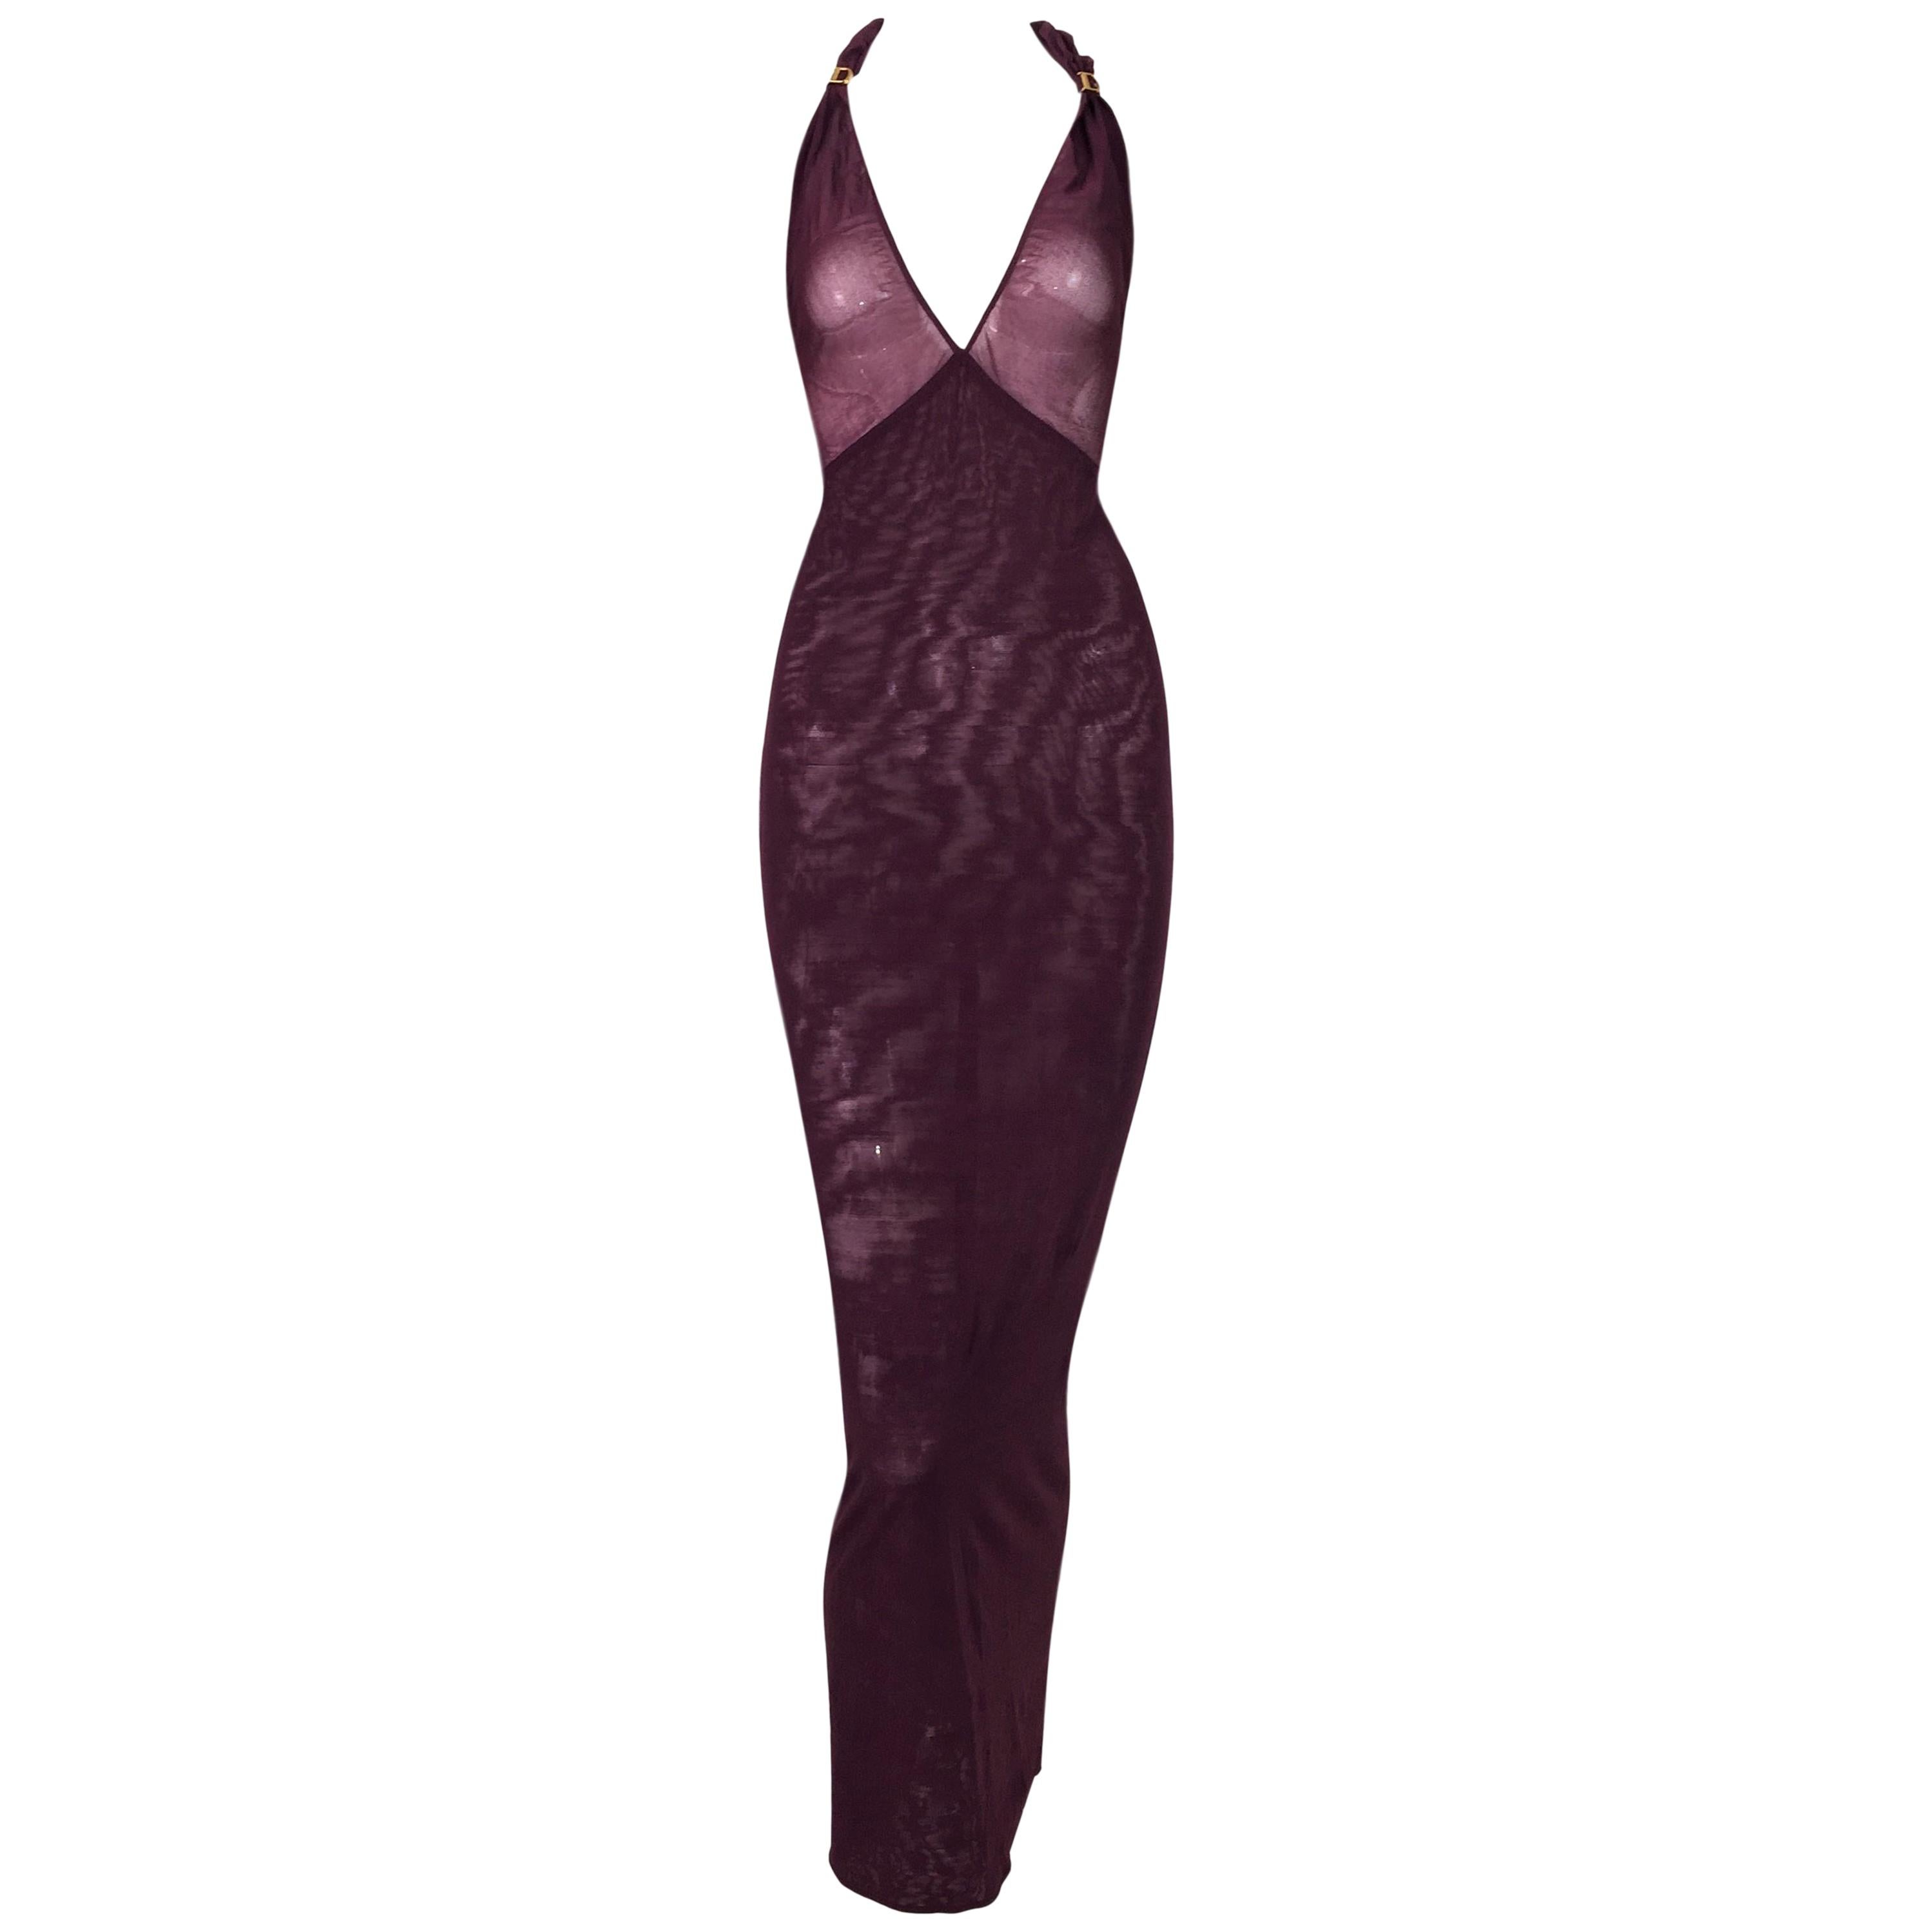 Circa 2000 Christian Dior Sheer Burgundy Halter Pin-Up Wiggle Long Dress